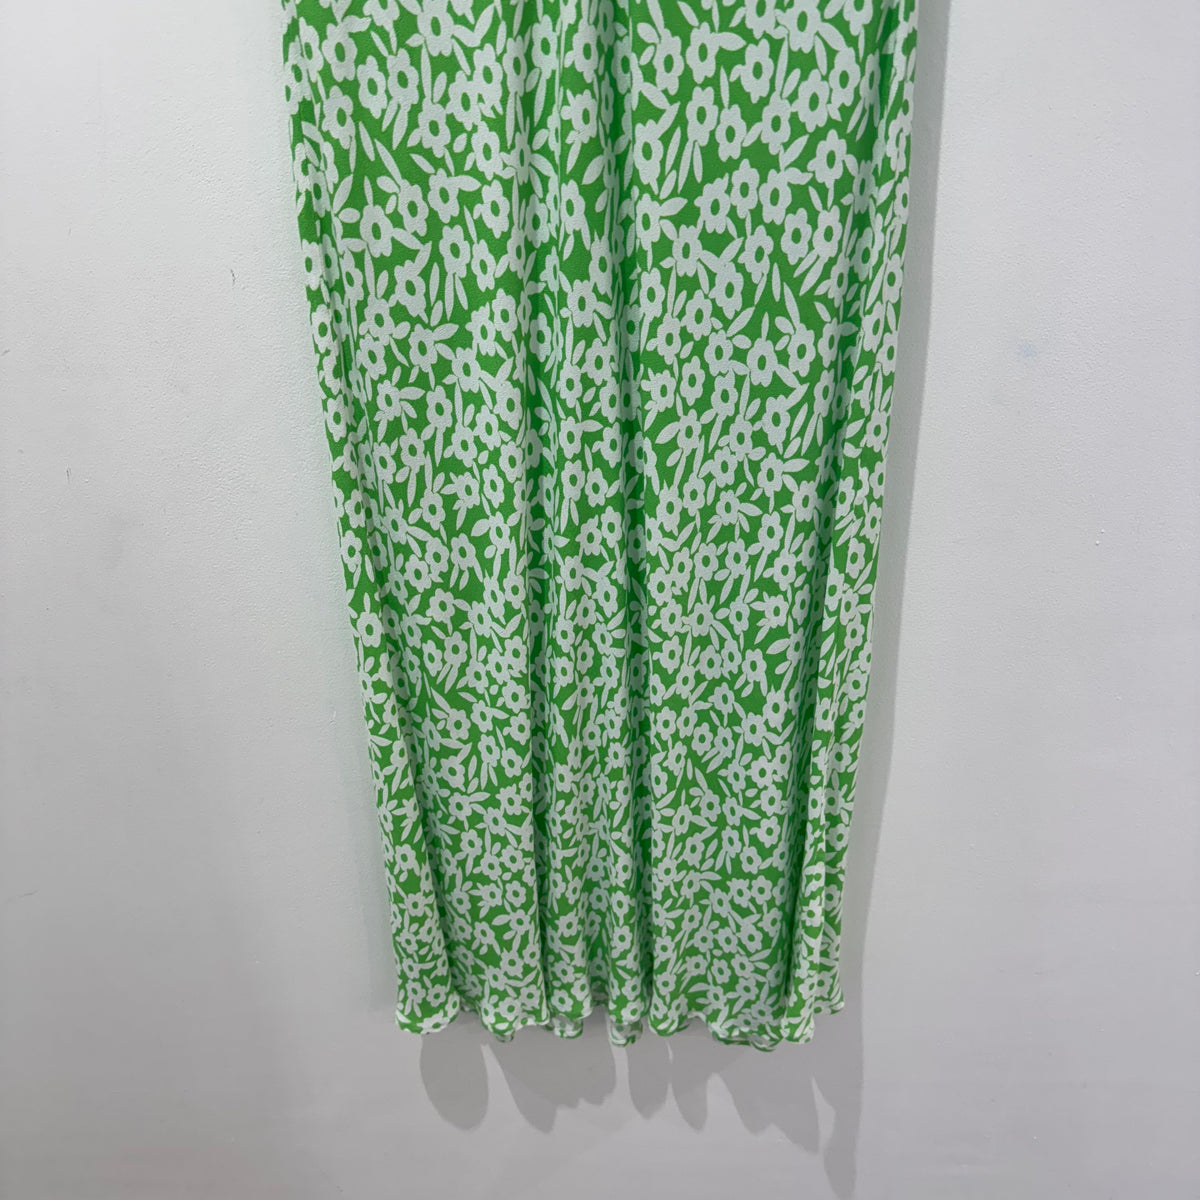 Rixo print maxi dress Green/Black/White Size 14